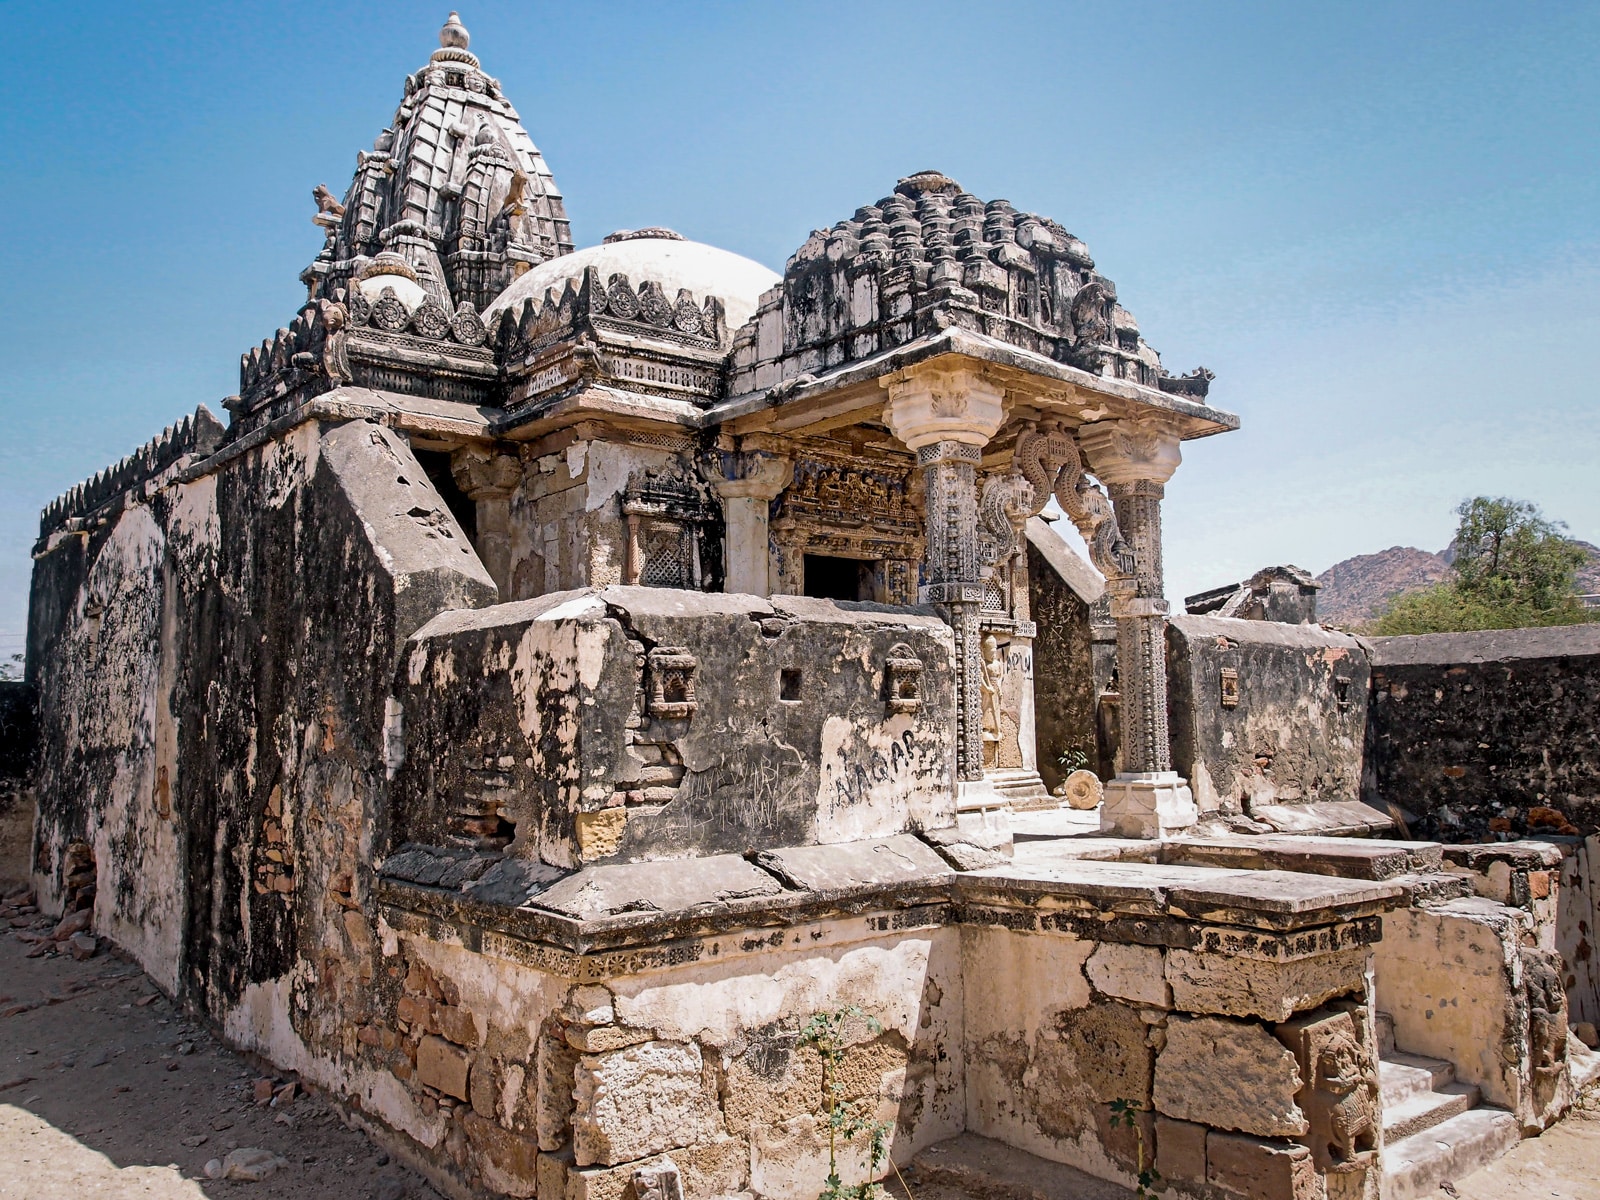 Sindh travel guide - Jain temple in Nagarparkar, Pakistan - Lost With Purpose travel blog